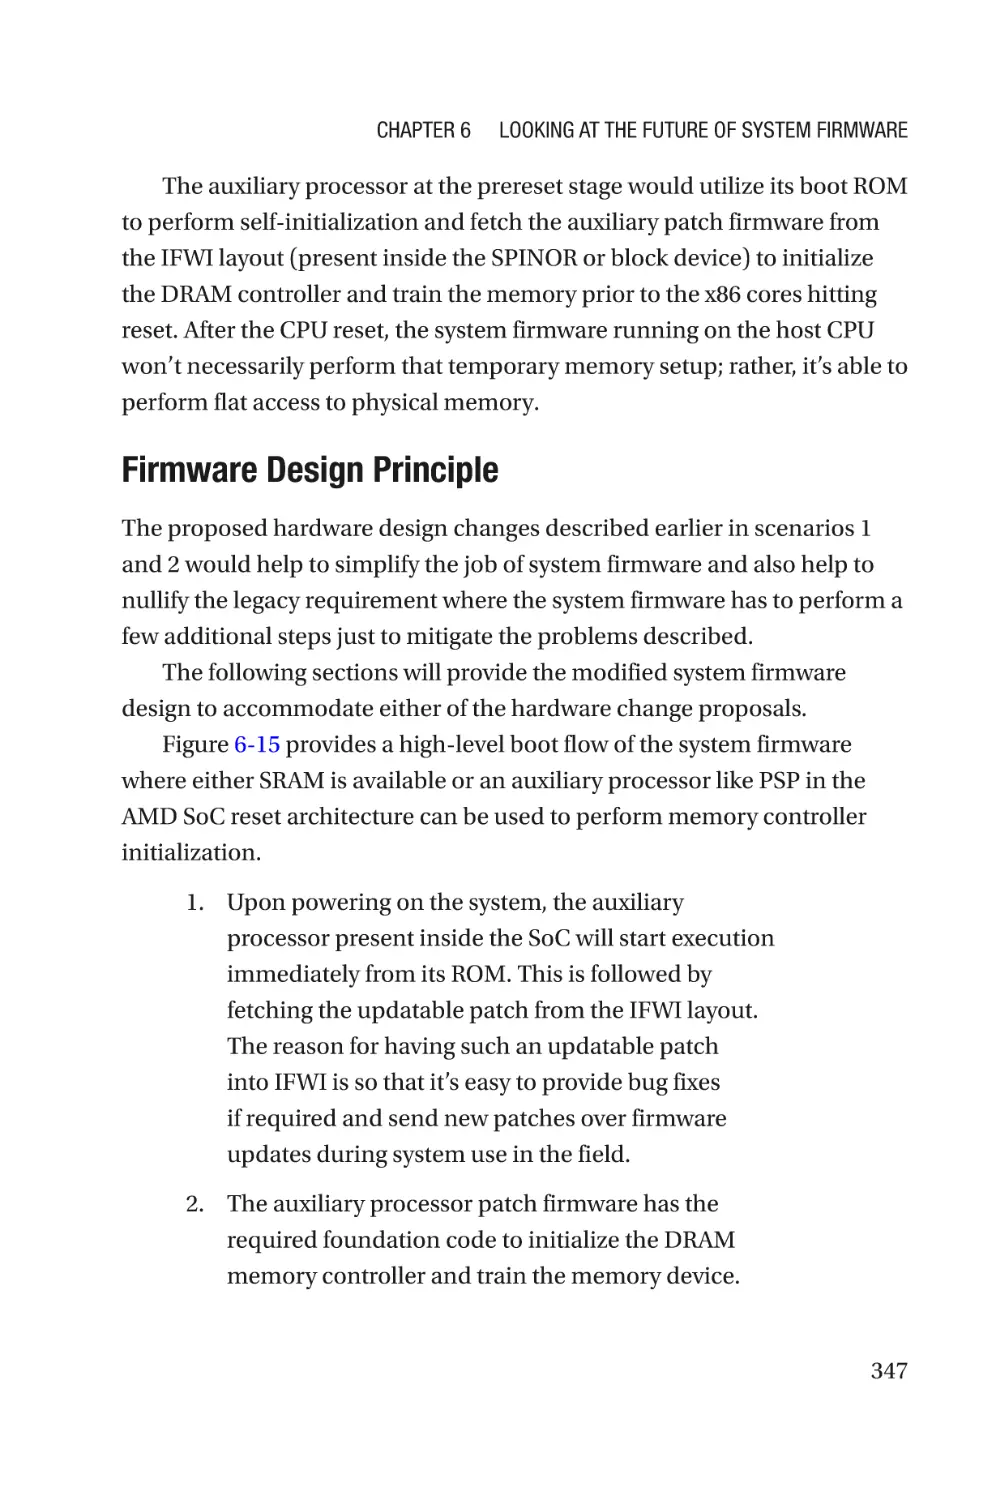 Firmware Design Principle